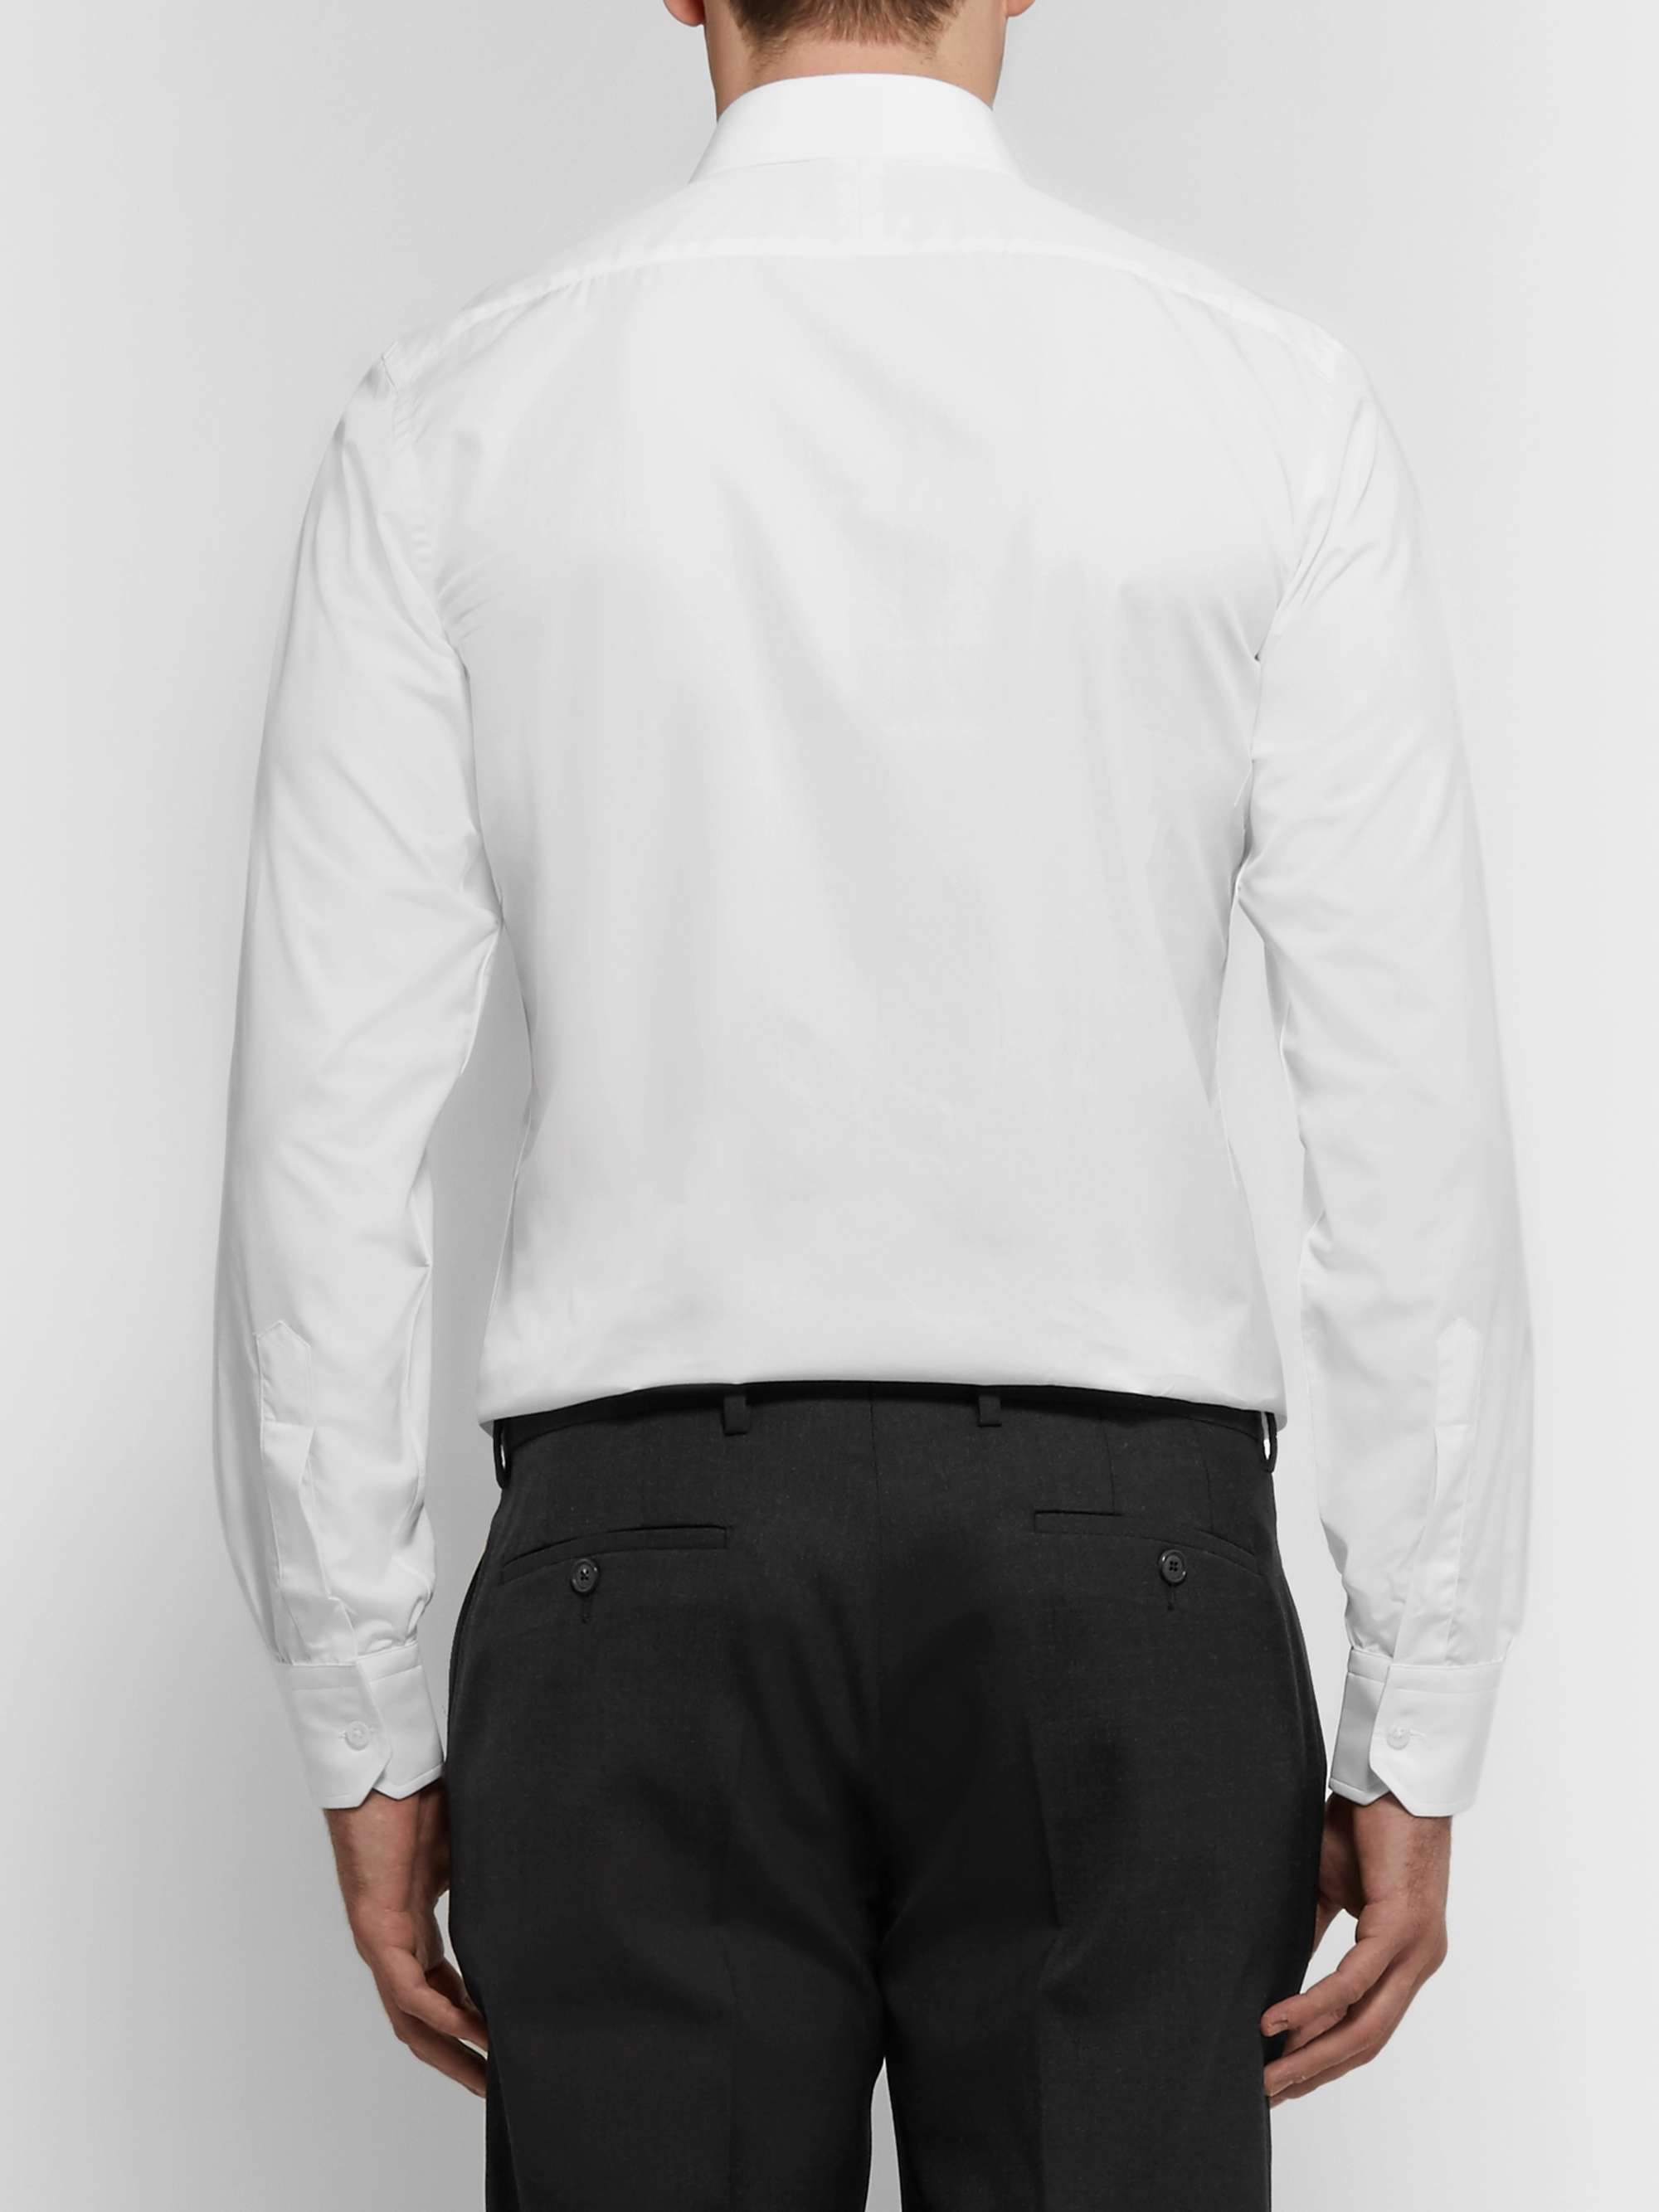 TURNBULL & ASSER White Cotton Shirt